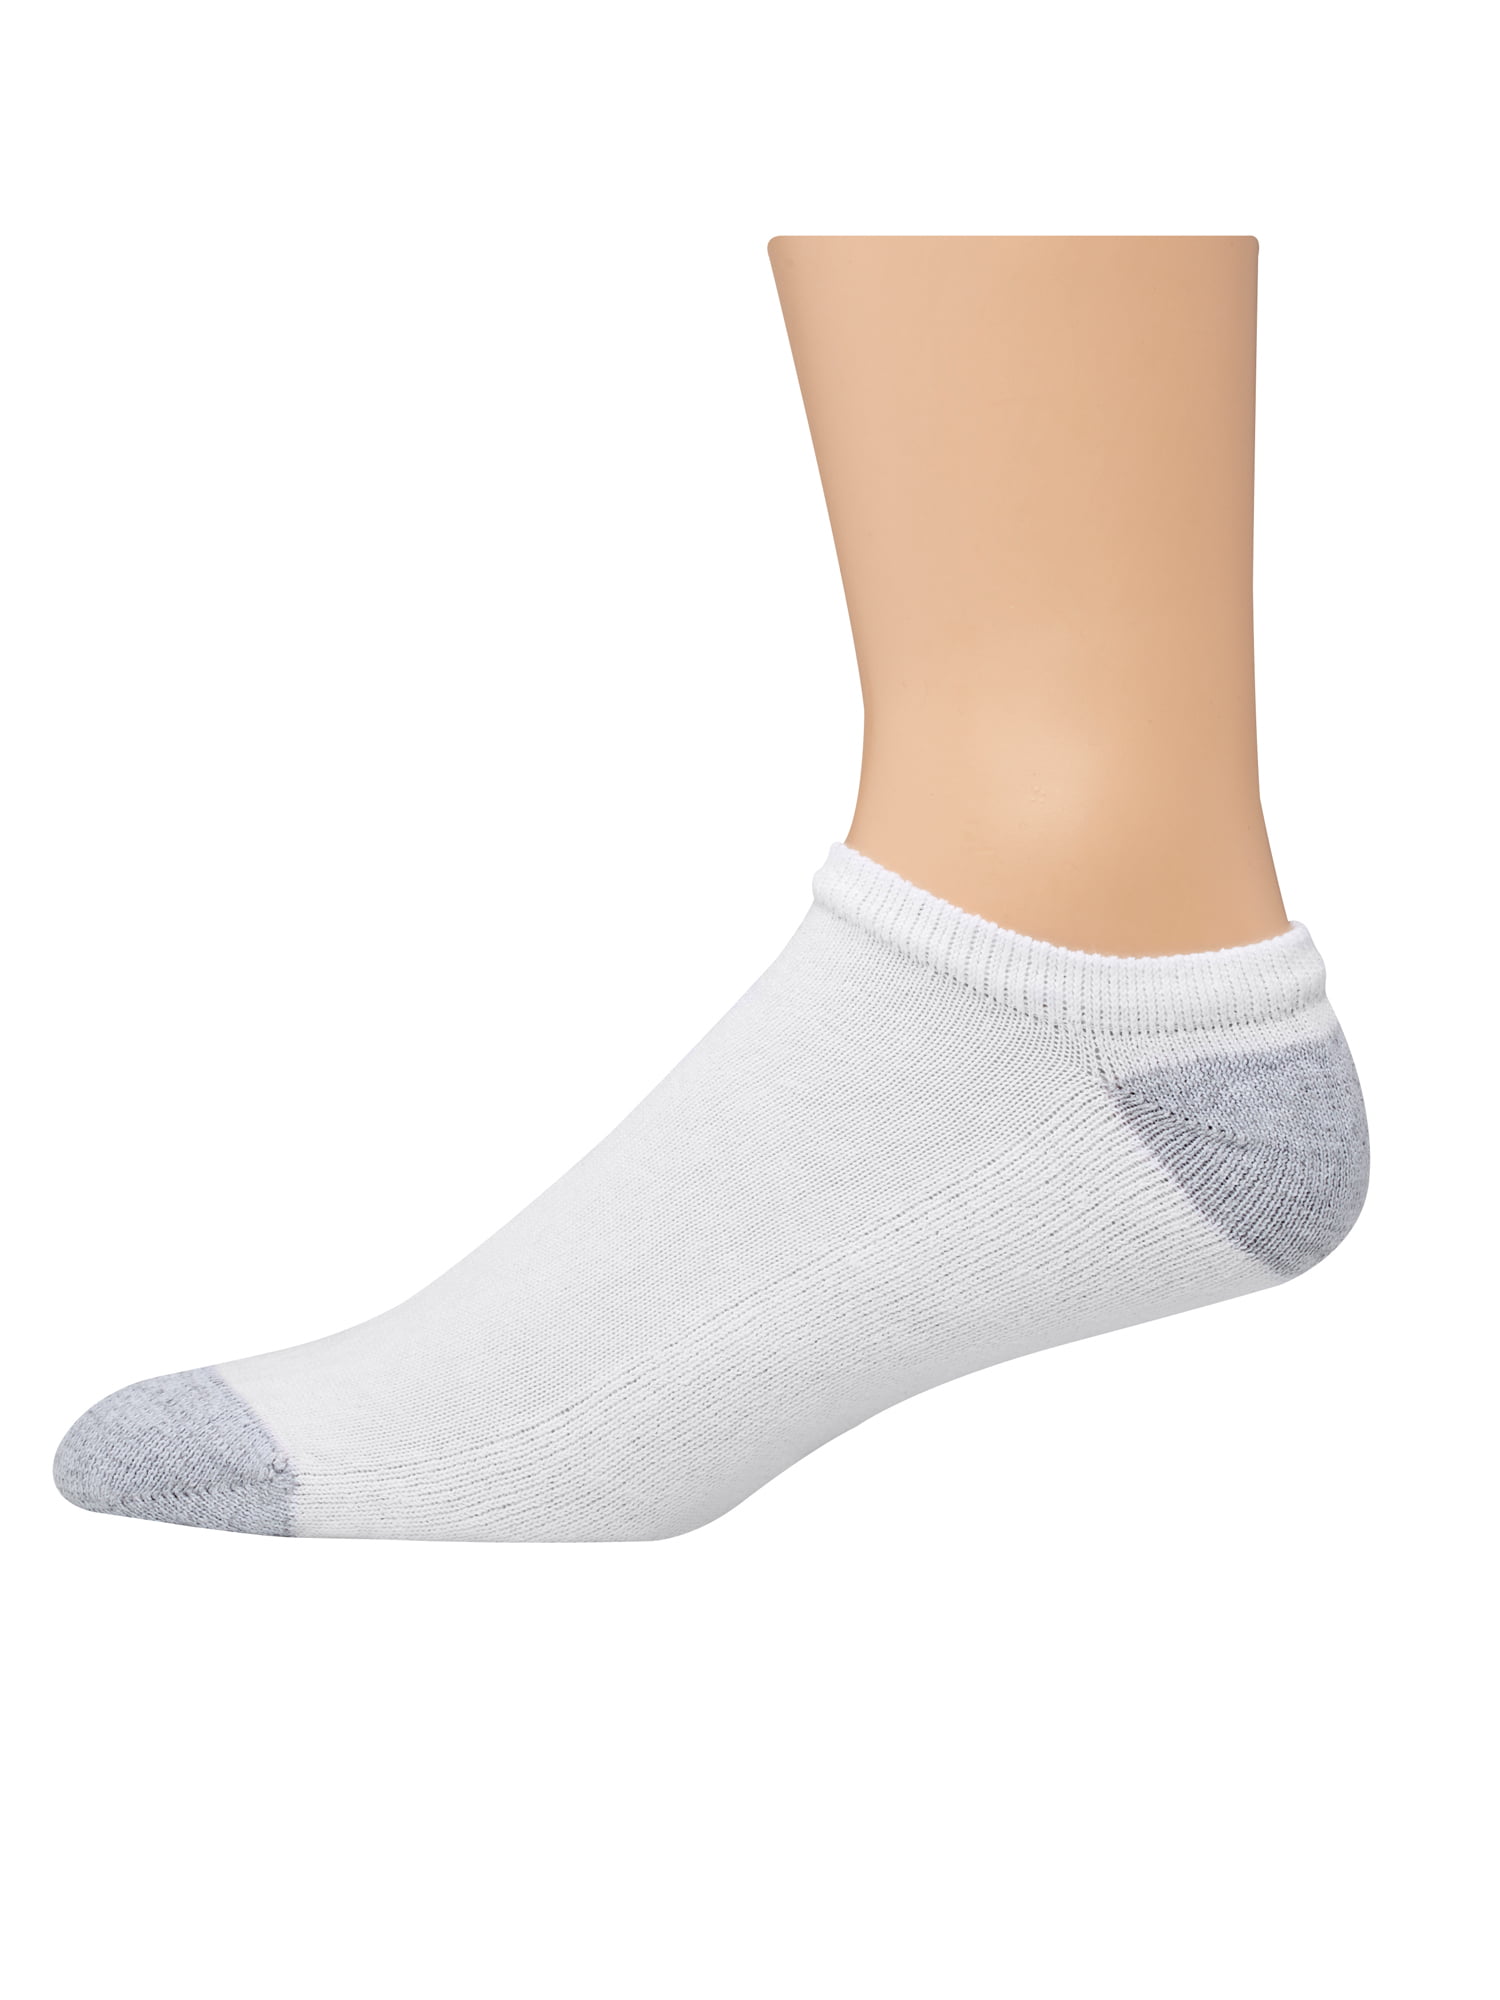 Show Socks, 20 Pack - Walmart.com 